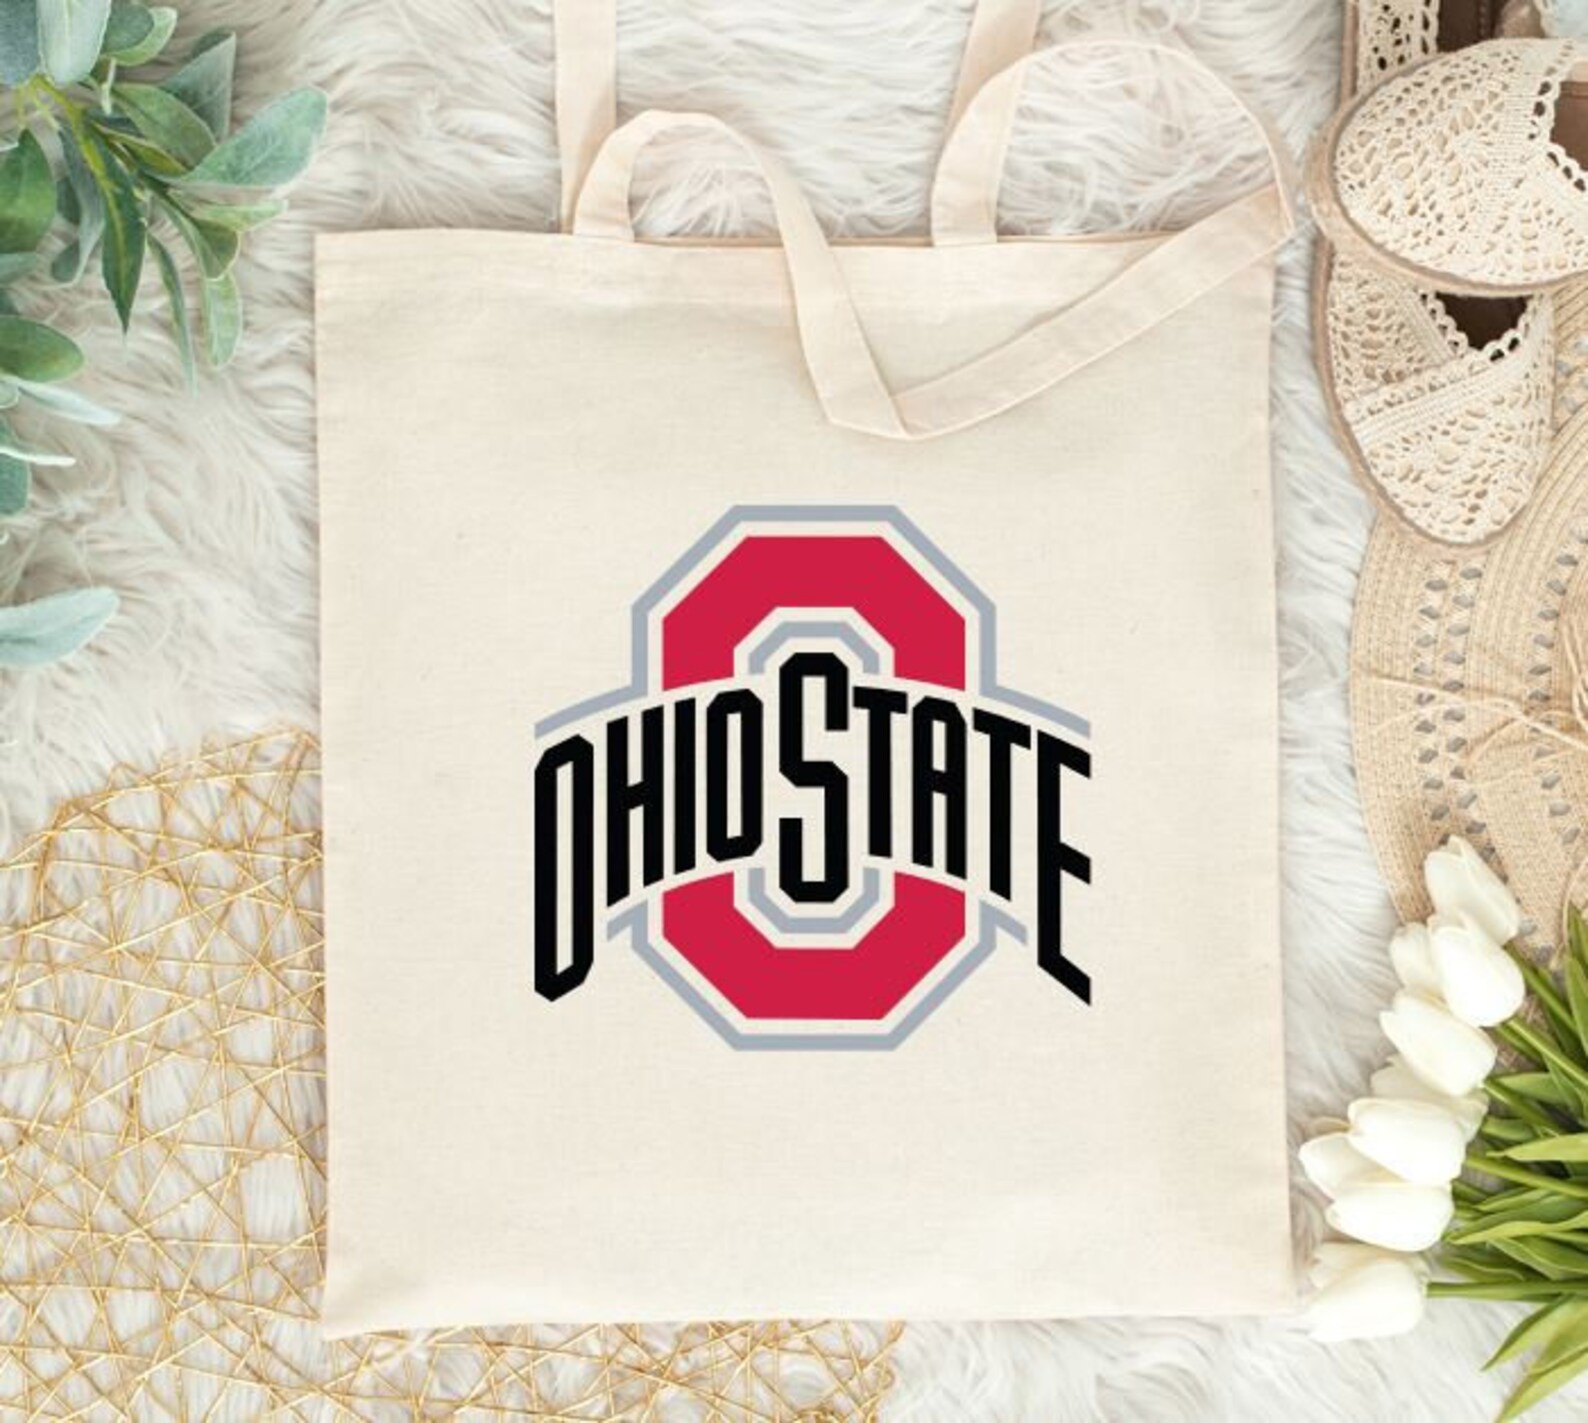 Ivory eco bag with Ohio state logo.